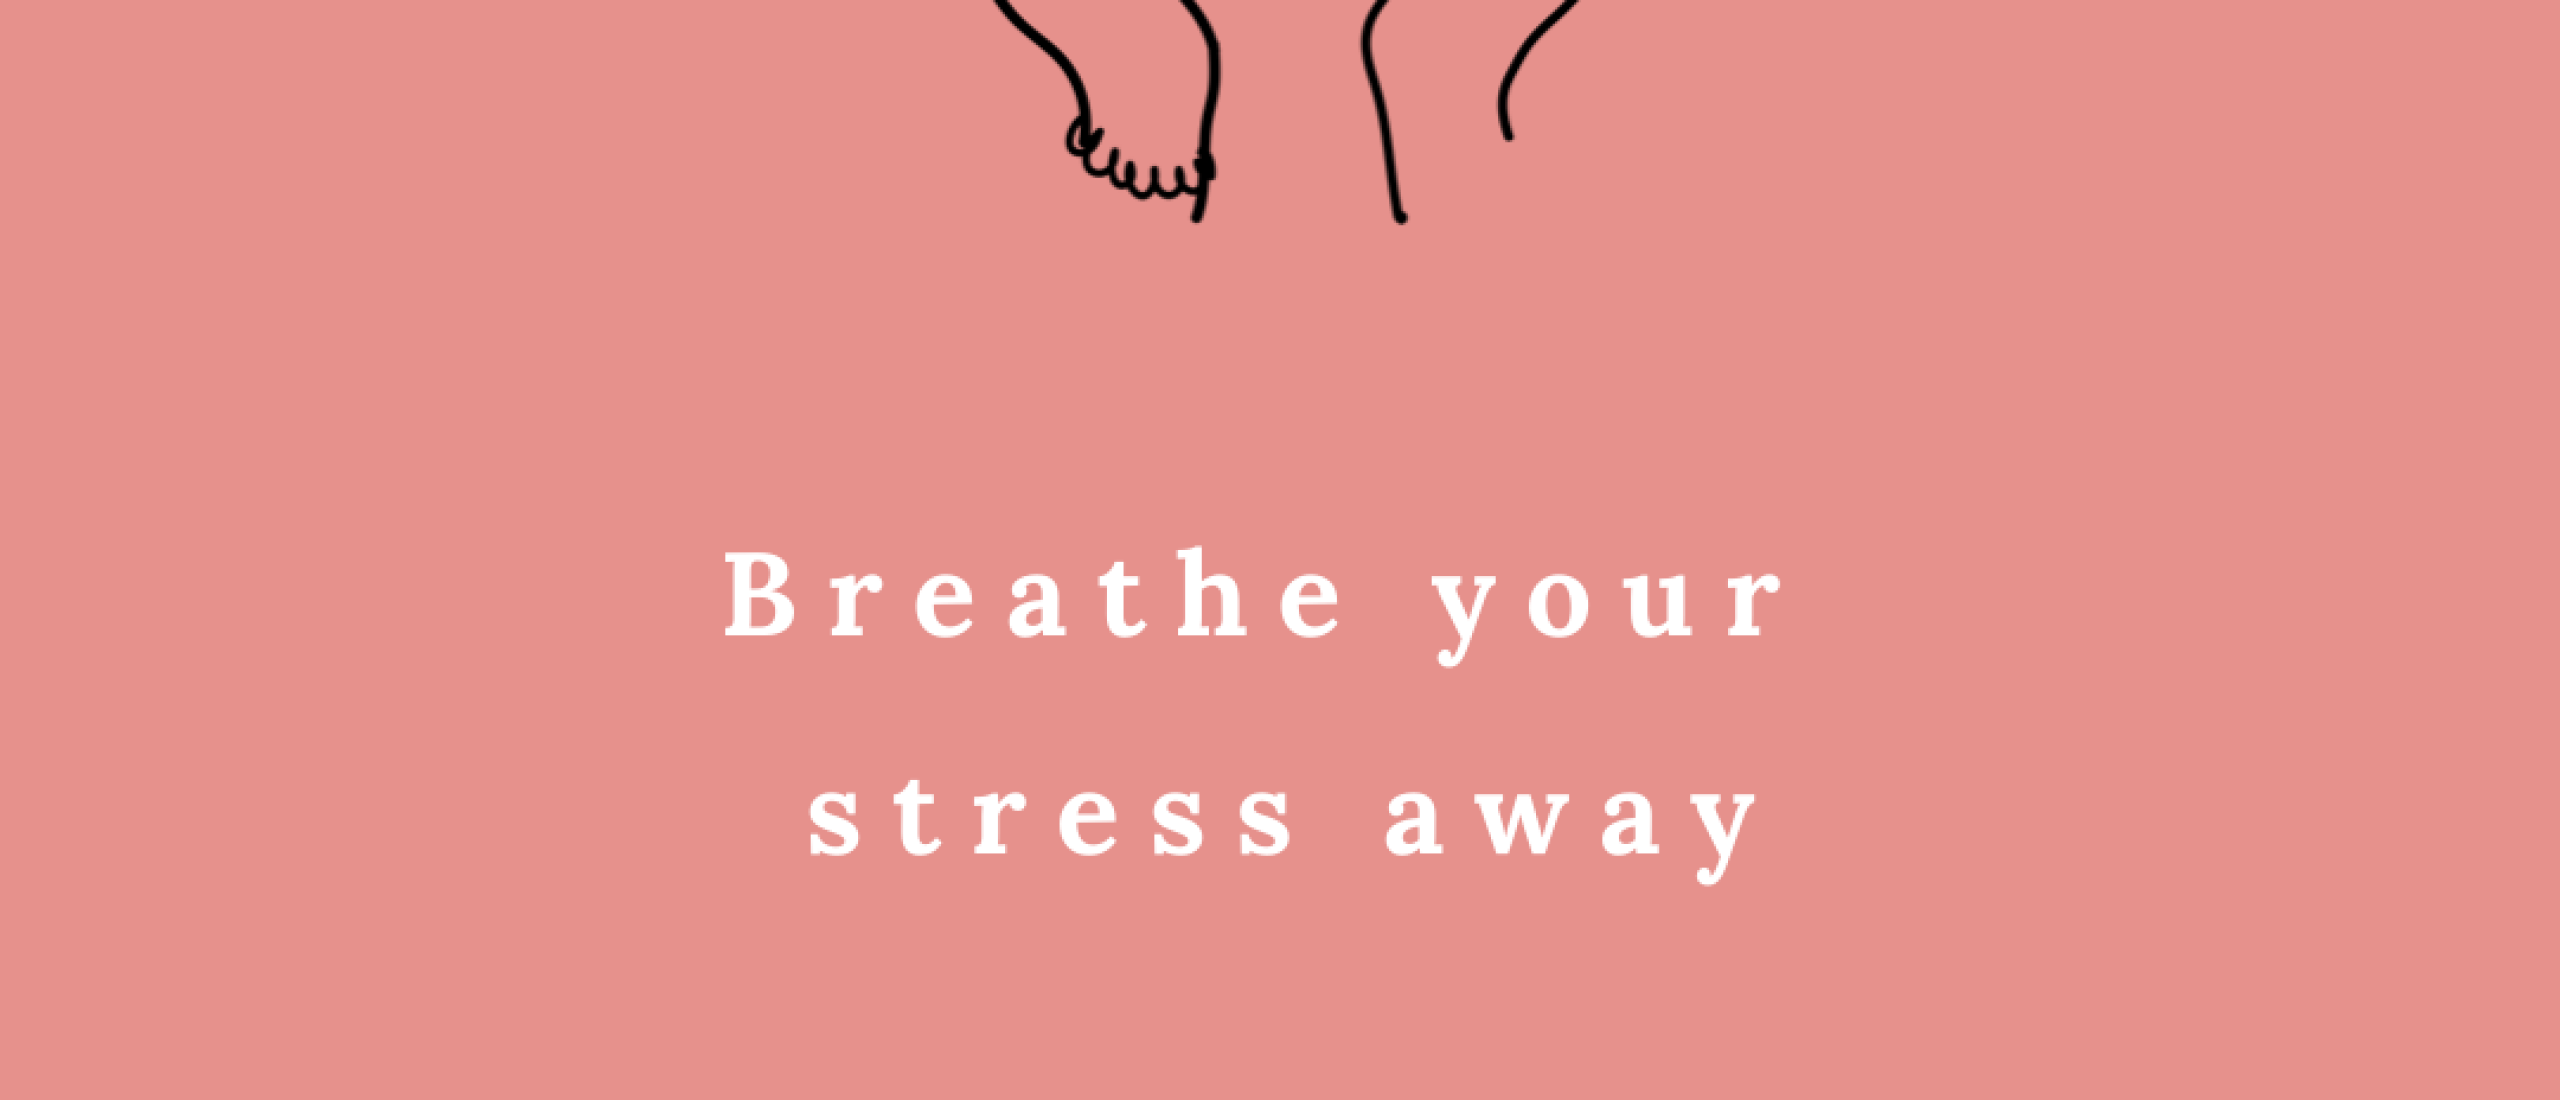 Adem jouw stress weg